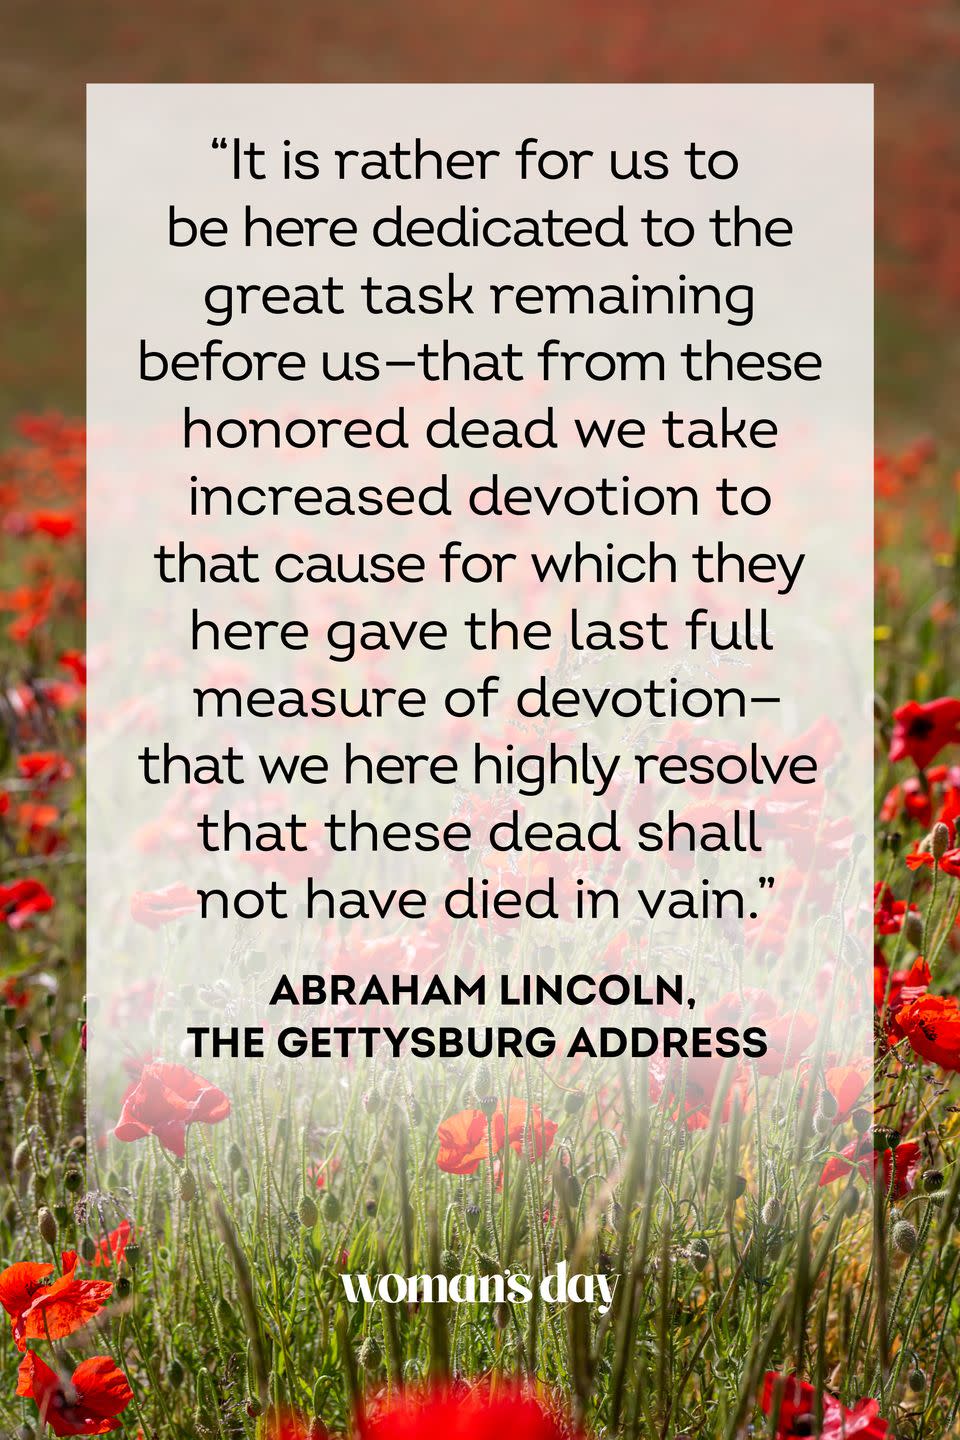 4) Abraham Lincoln, The Gettysburg Address